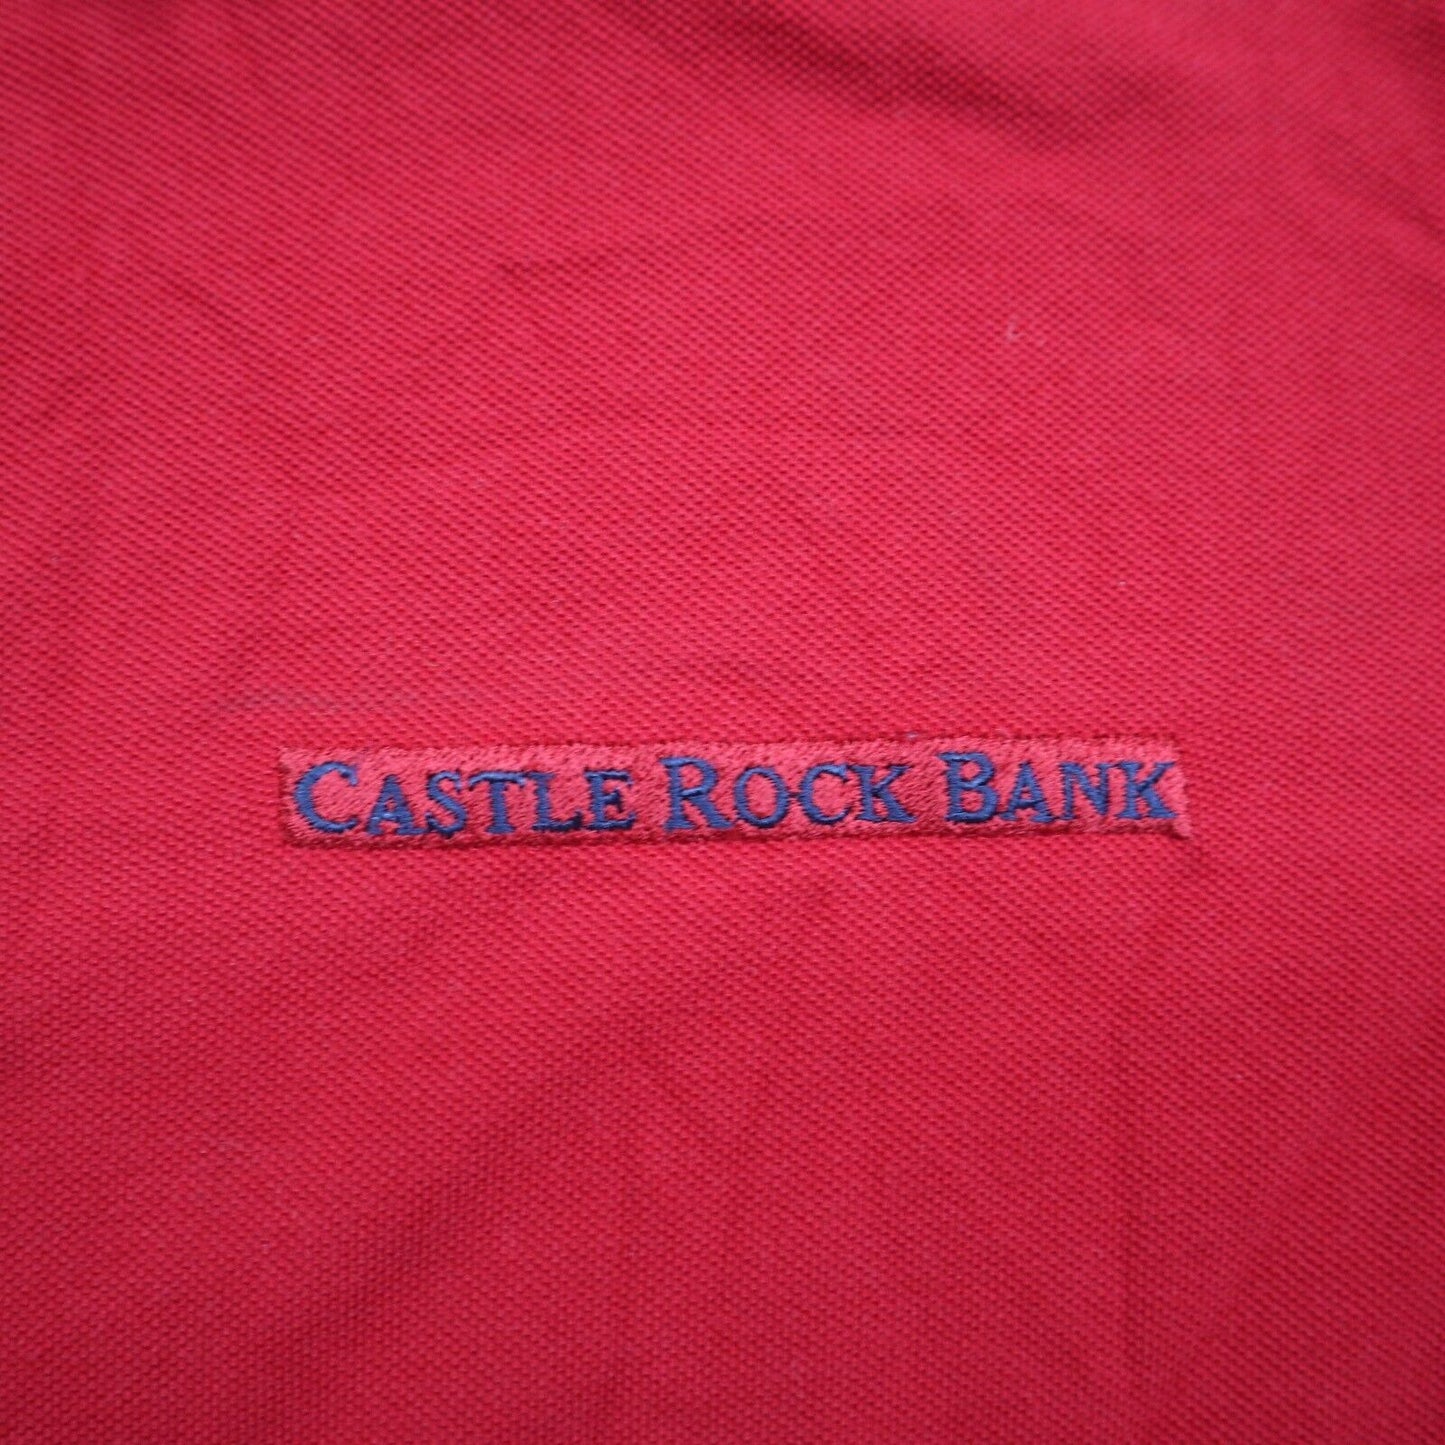 Lands End Mens Castle Rock Bank Logo Golf Polo Shirt Short Sleeves Red Size L